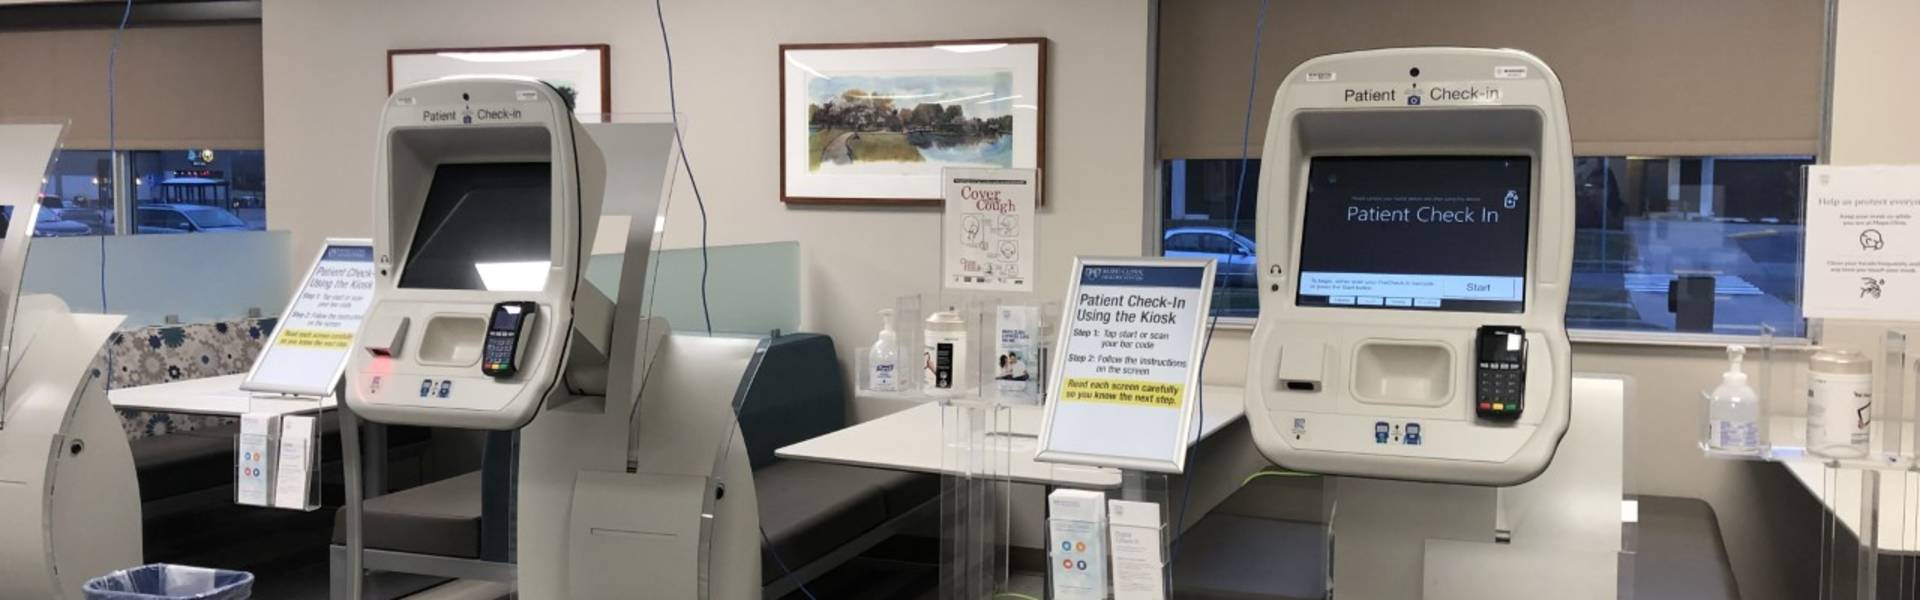 Mayo Health Clinic vaccine check-in area